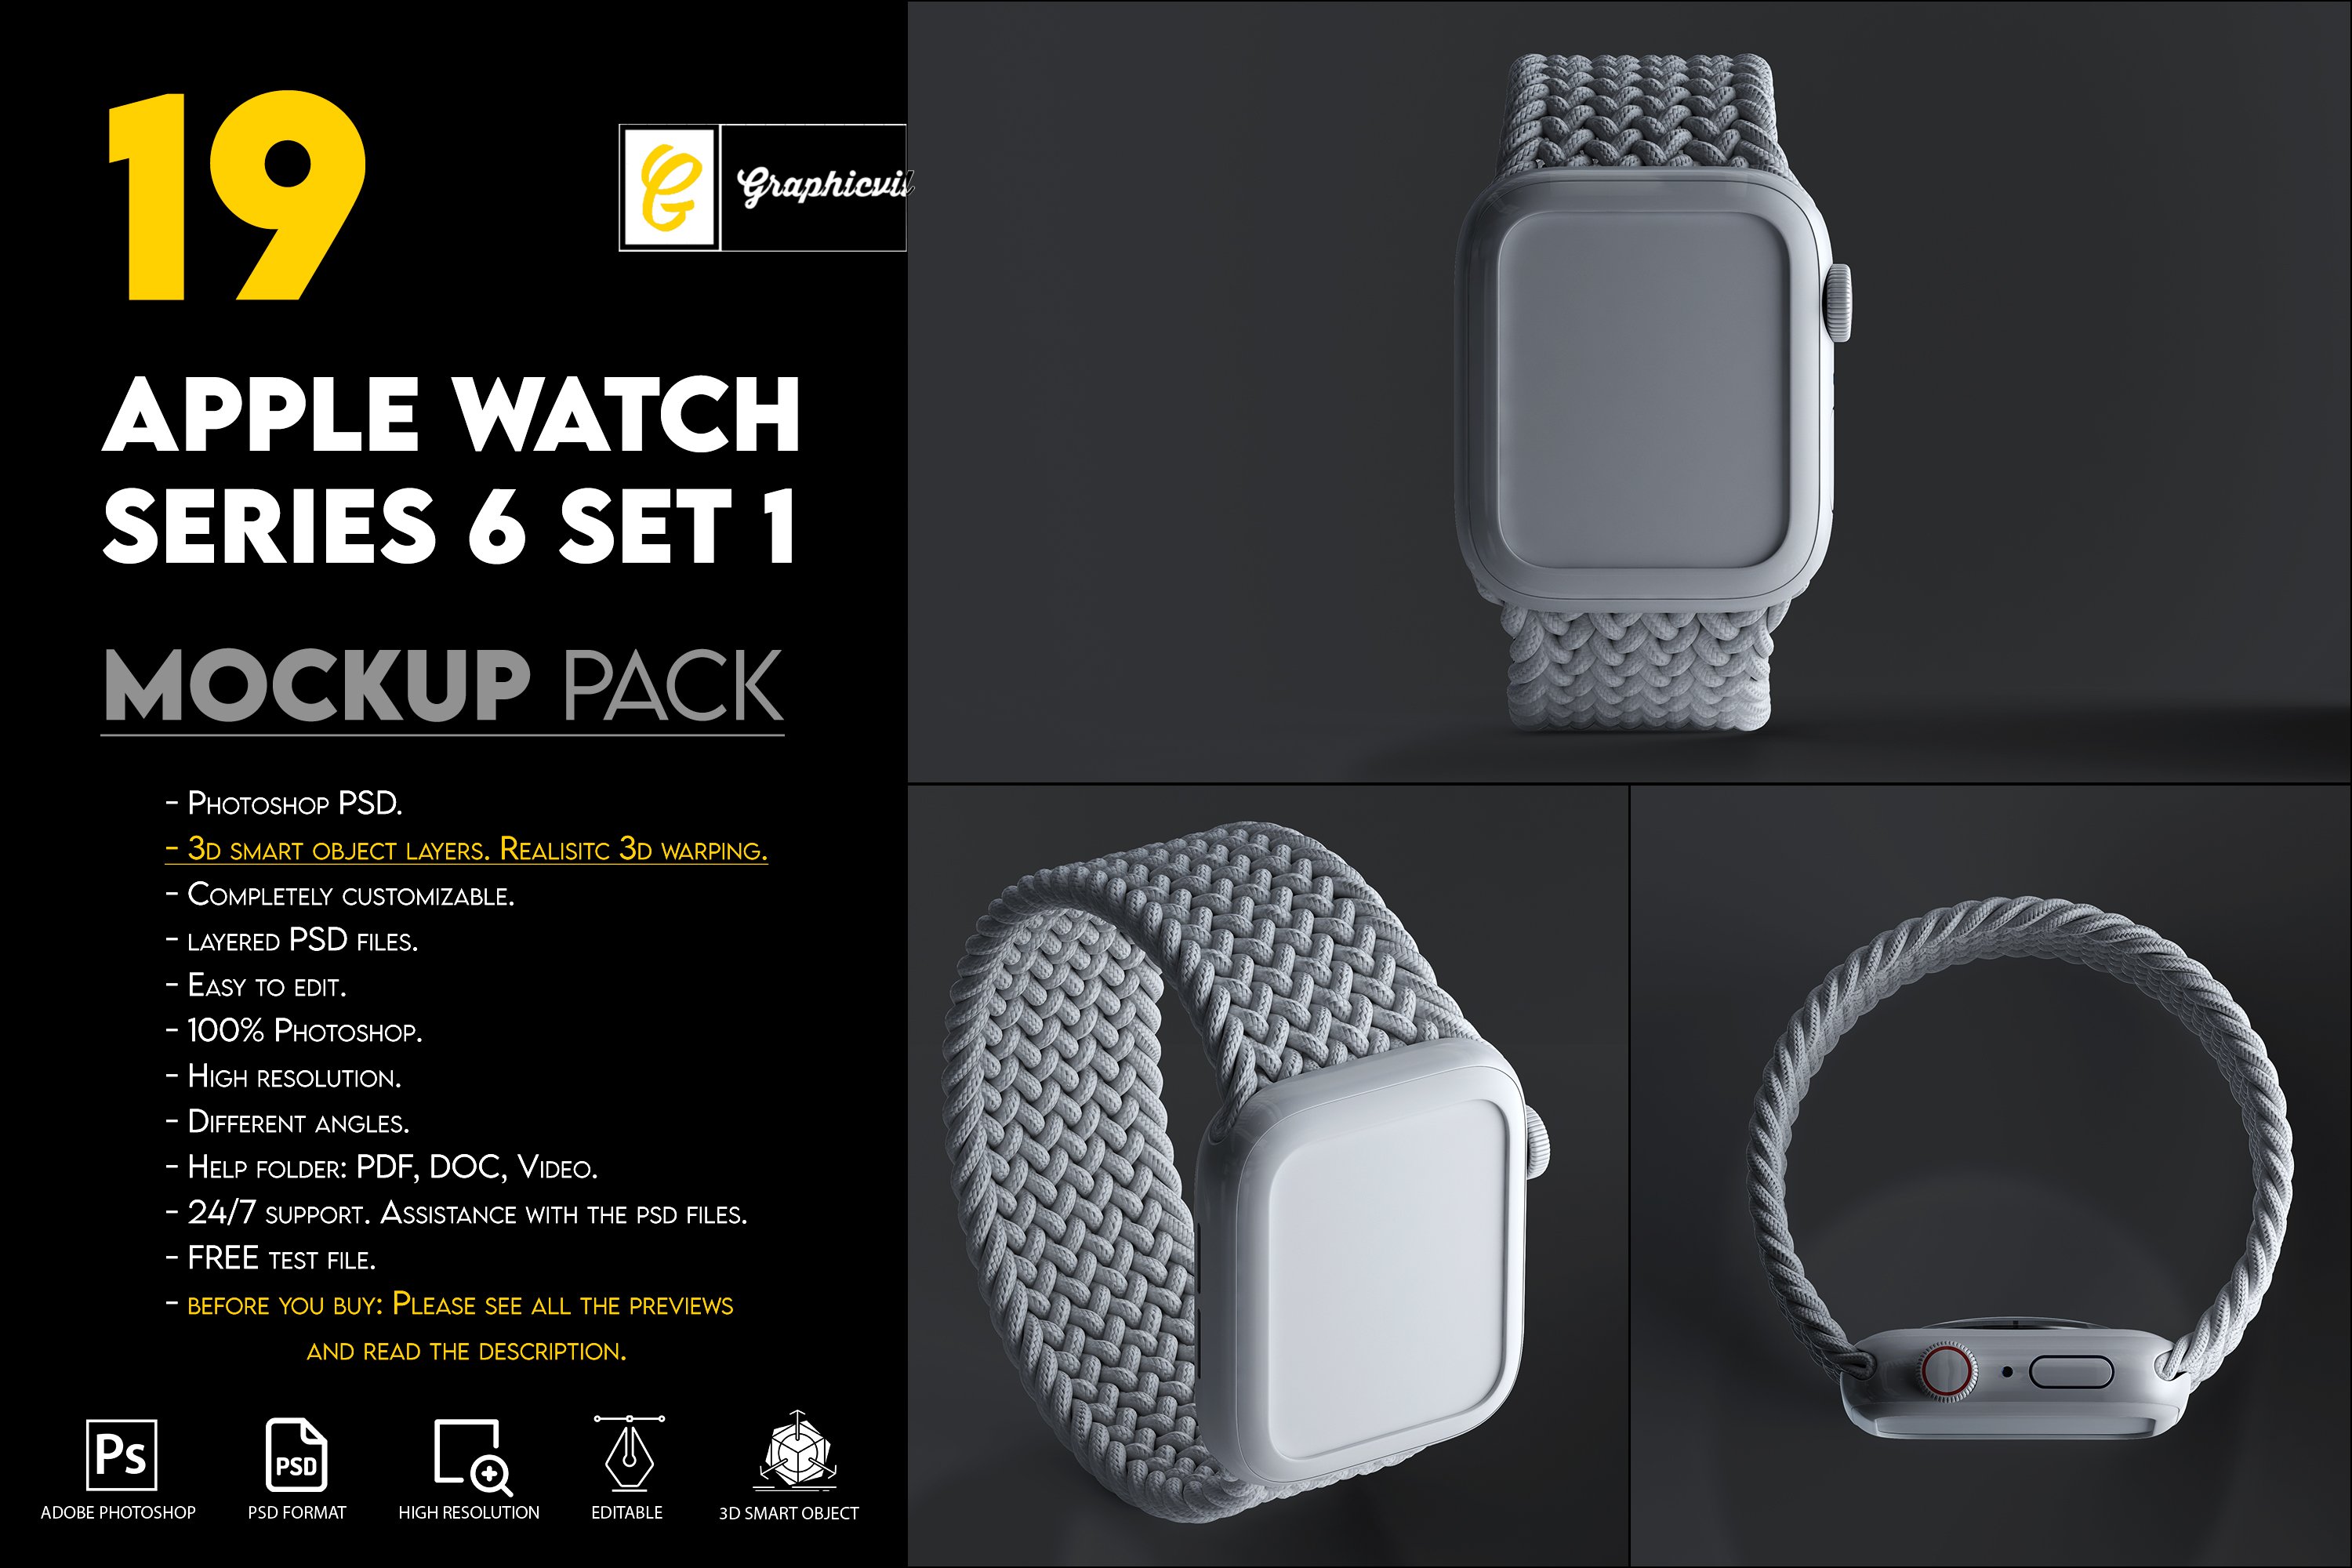 Apple Watch Series 6 mockup set 1 cover image.